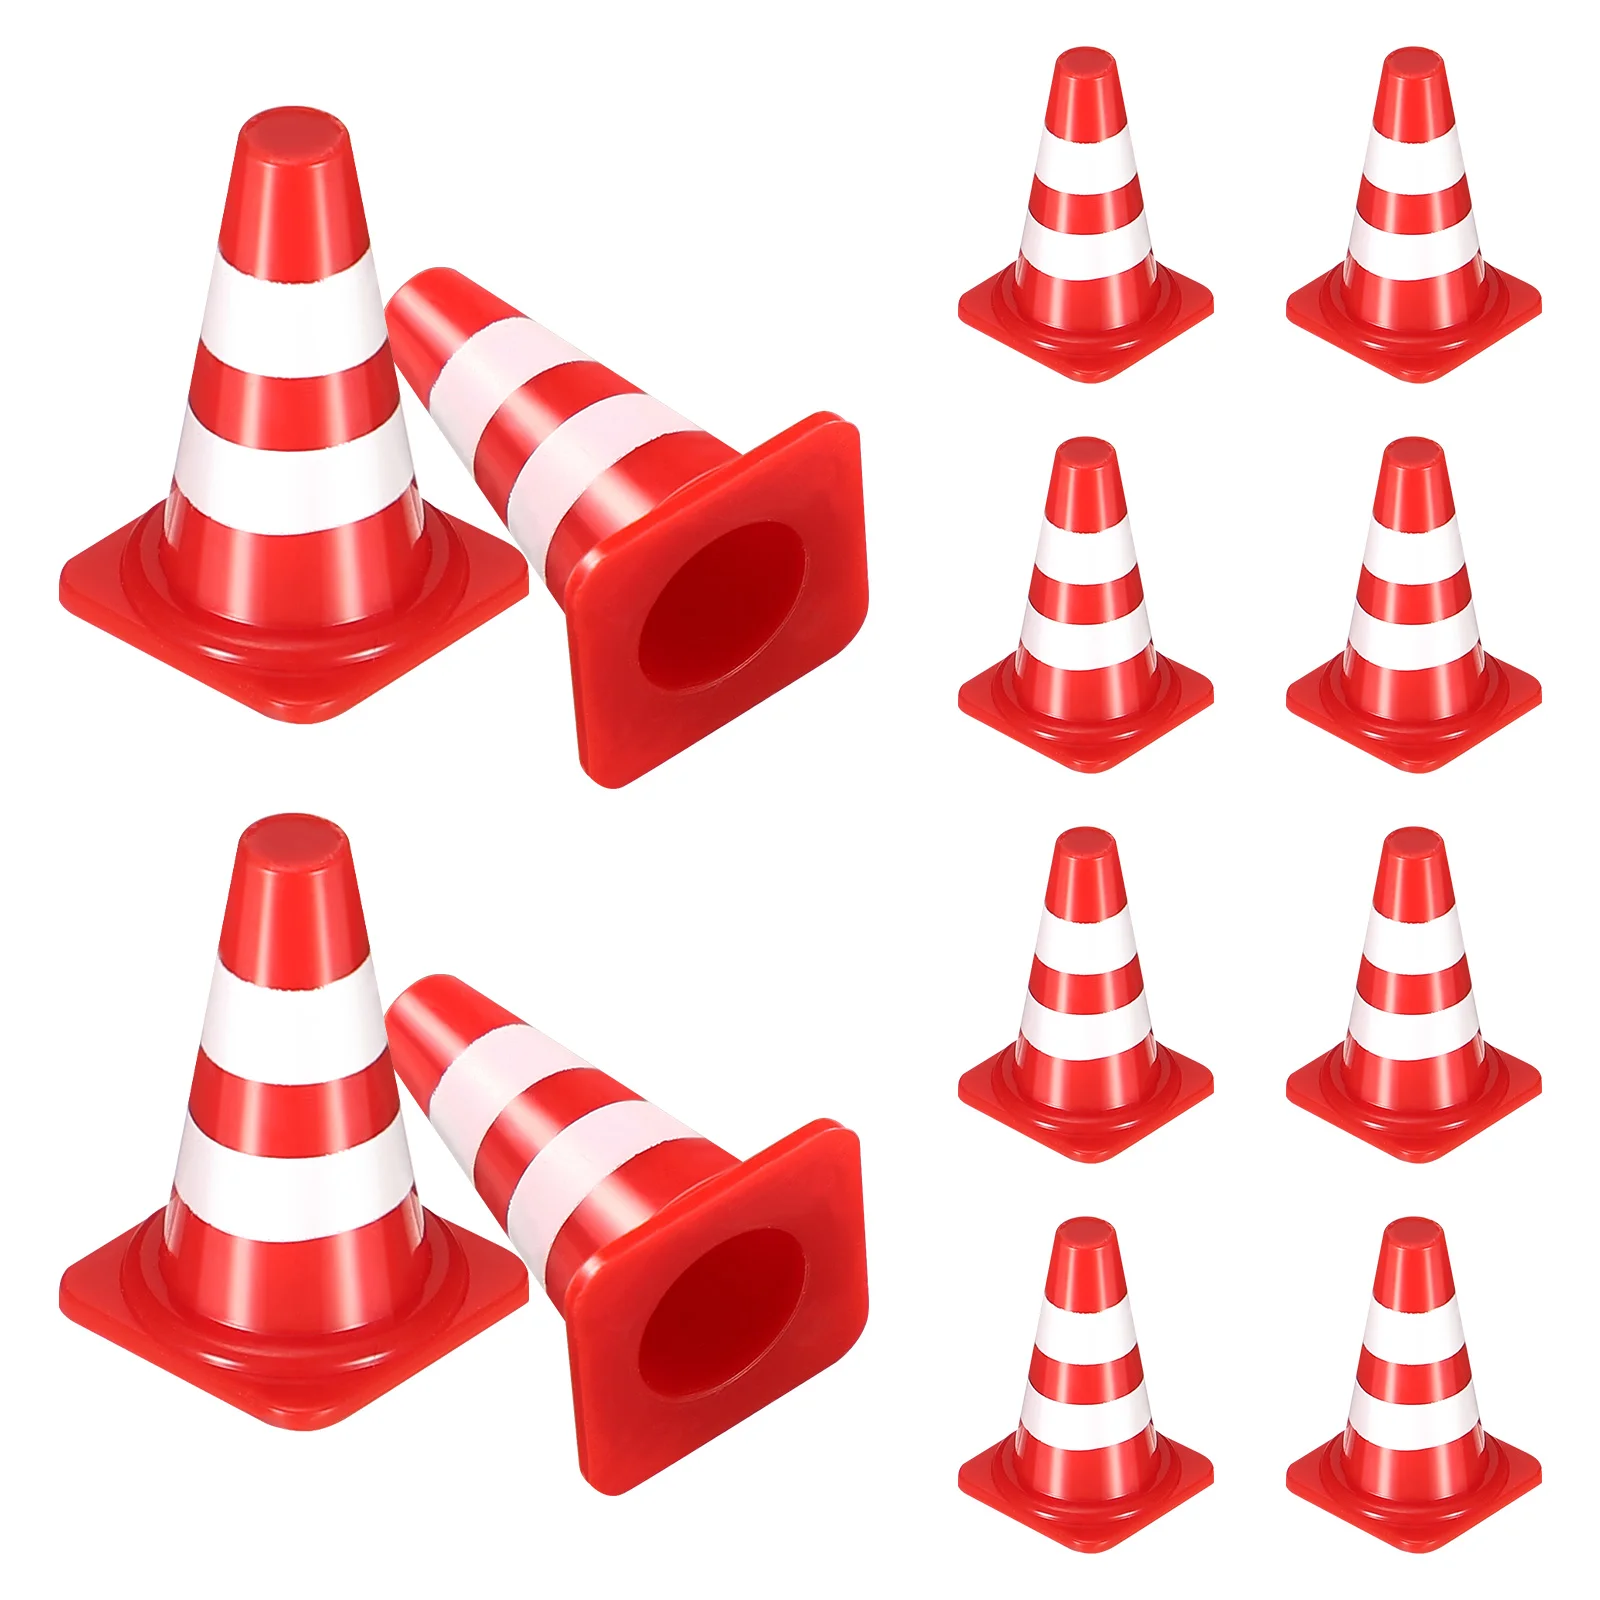 

Cones Traffic Mini Road Toys Cone Construction Safety Toy Parking Signs Roadblock Roadblocks Sign Plastic Training Miniature